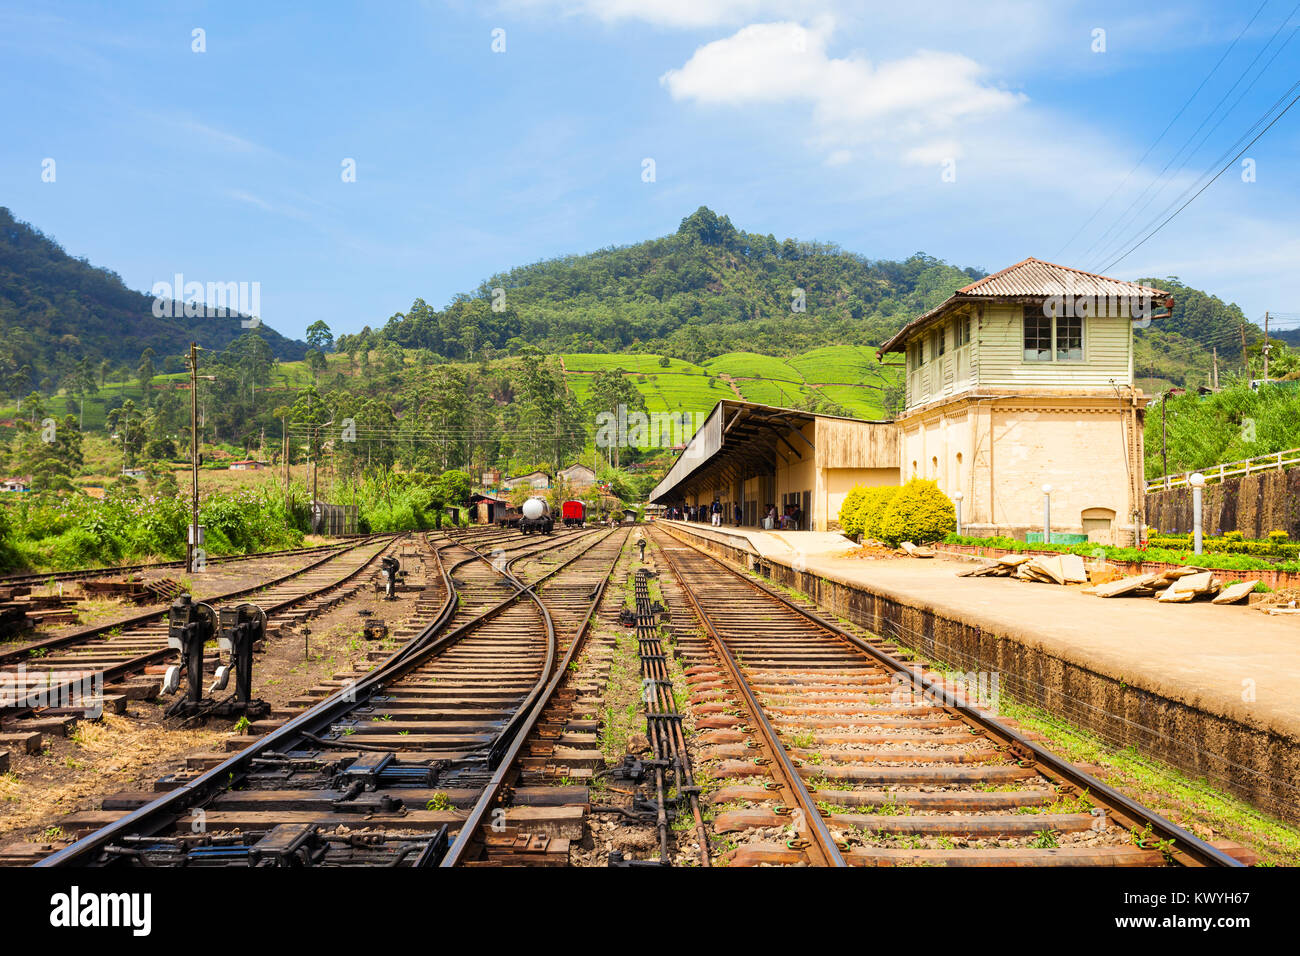 The Nanu Oya railway station near Nuwara Eliya, Sri Lanka. It is the main railway station in Nuwara Eliya region. Stock Photo